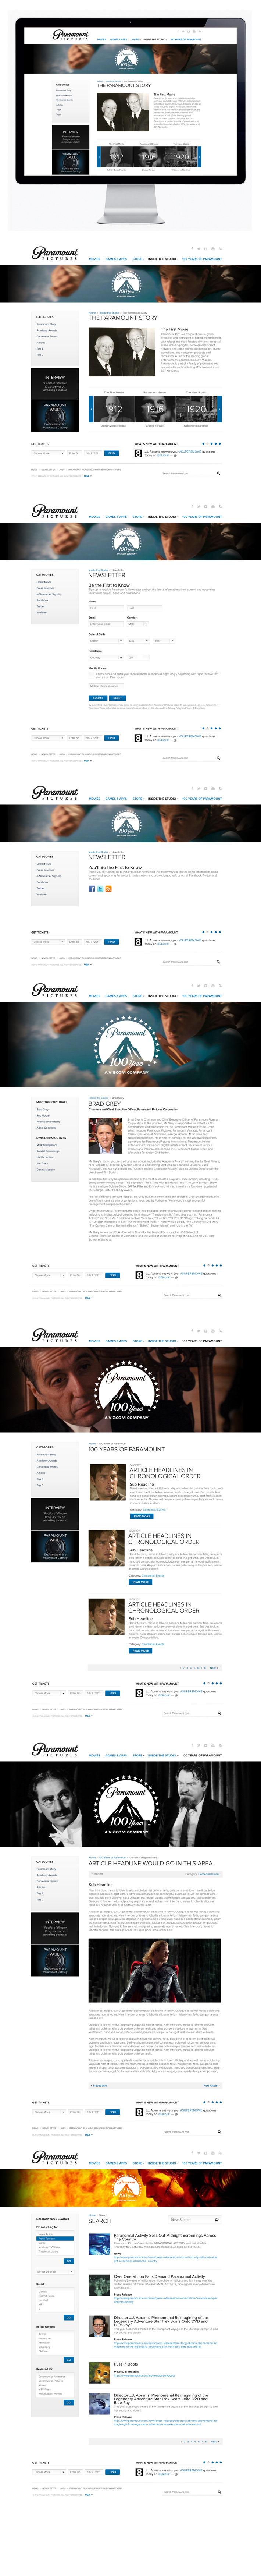 Paramount Paramount Pictures Website Web design Movies films